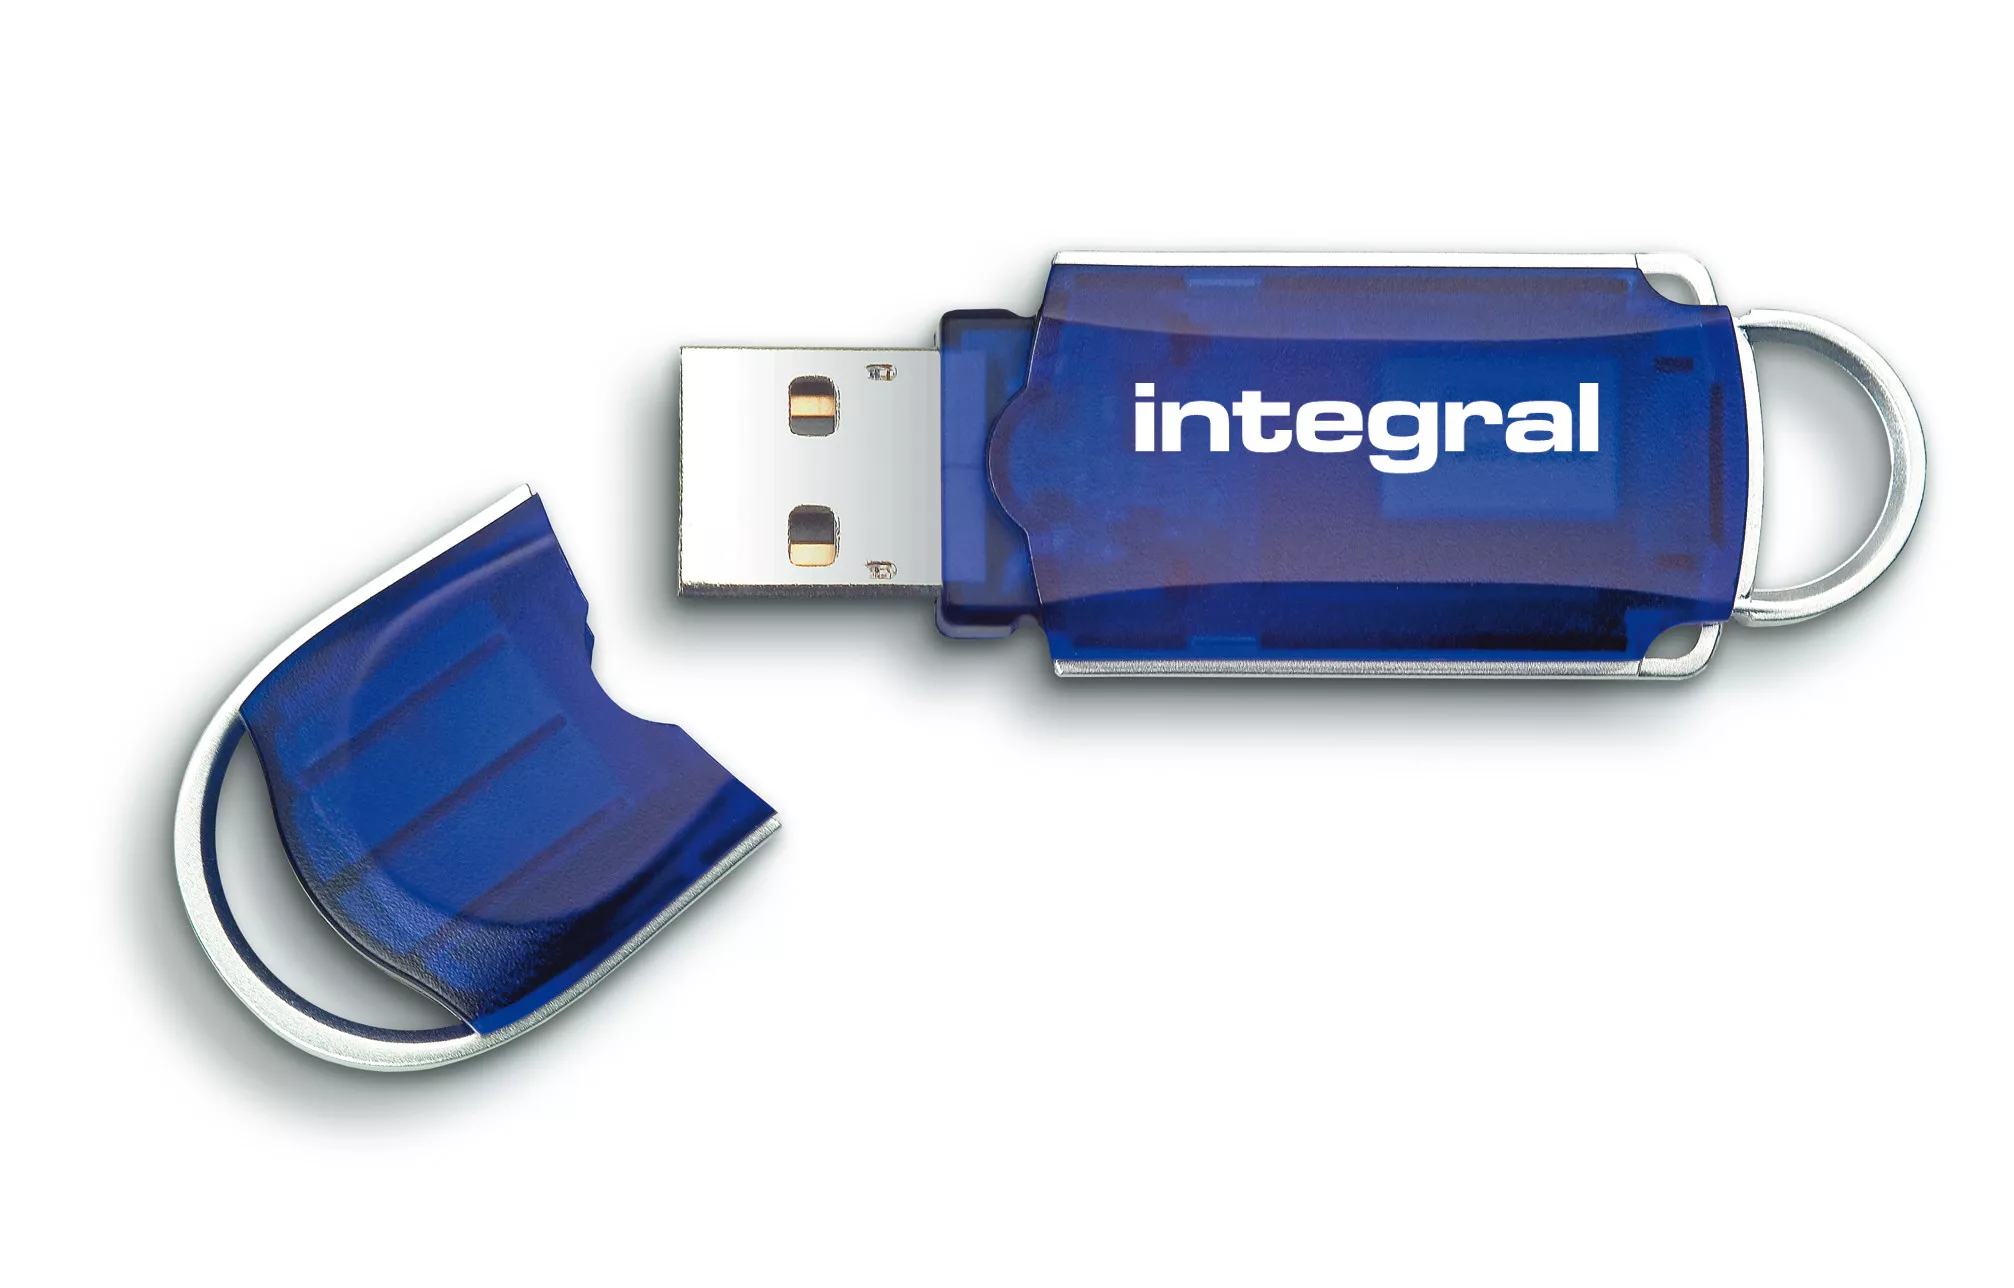 Vente Adaptateur stockage Integral 16GB USB2.0 DRIVE COURIER BLUE INTEGRAL